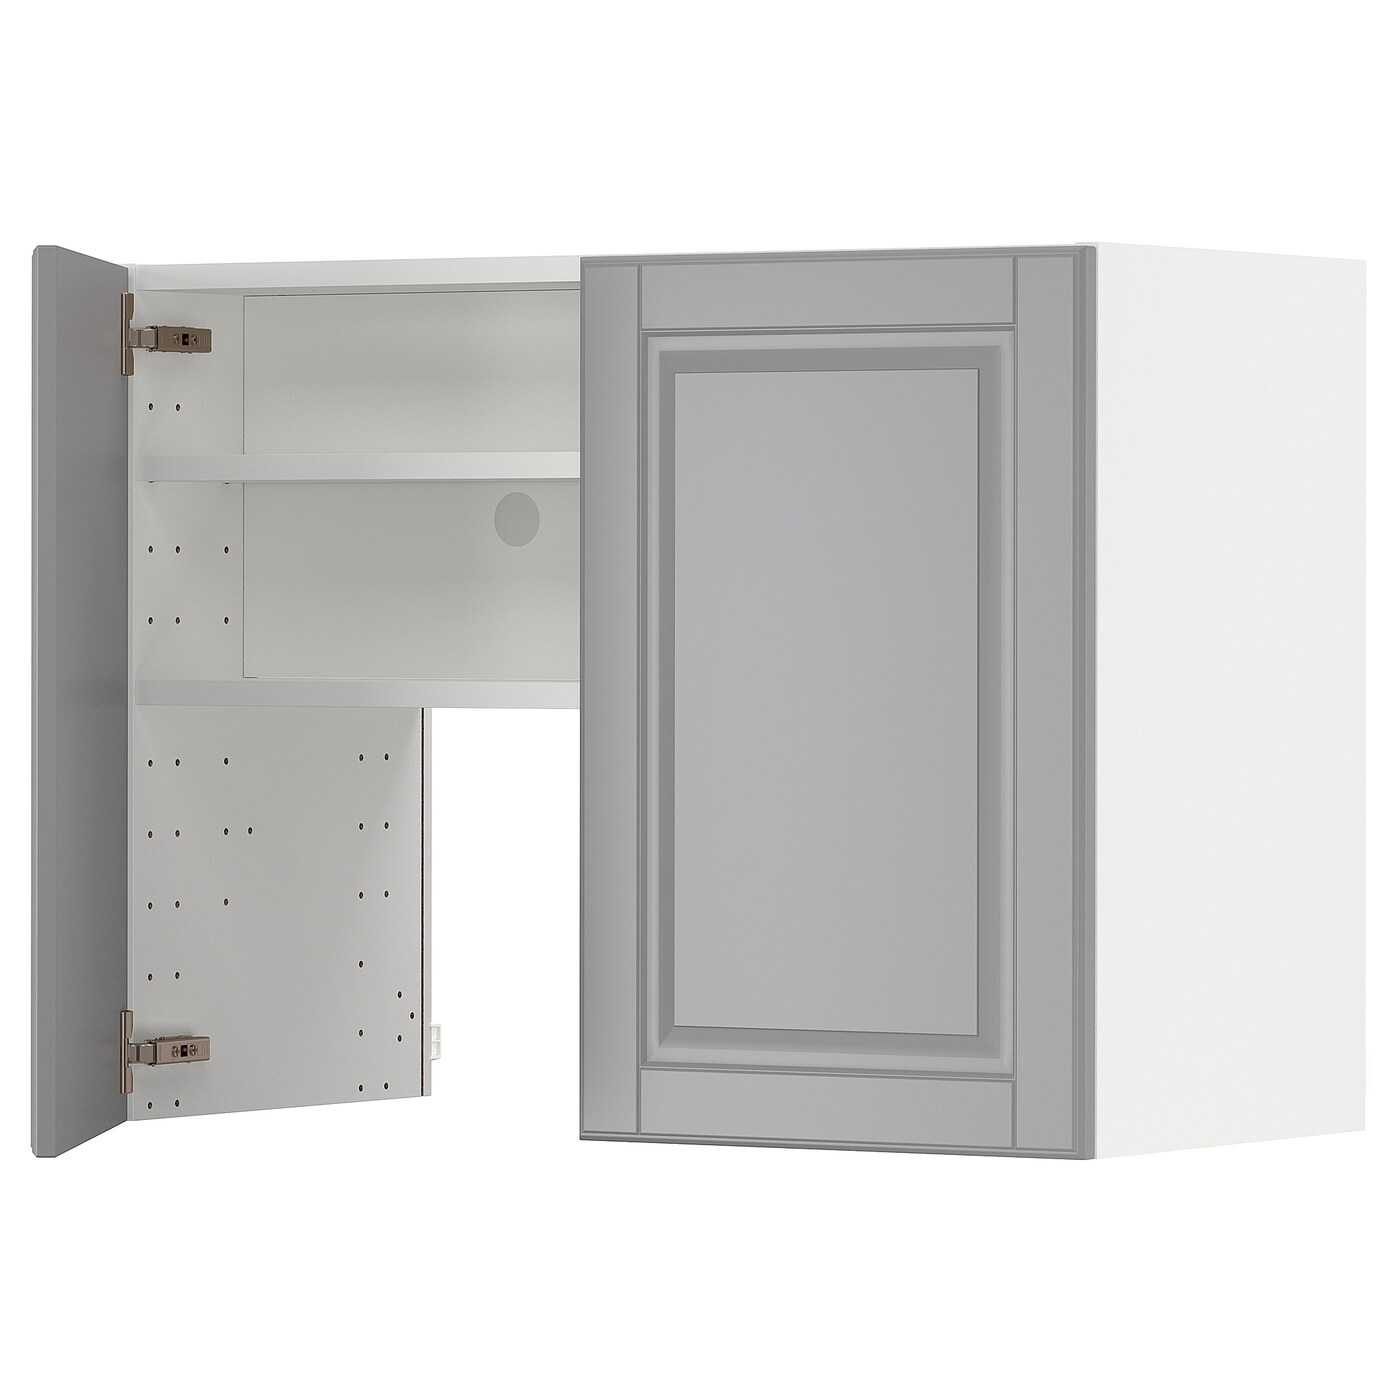 METOD Навесной шкаф - METOD IKEA/ МЕТОД ИКЕА, 60х80 см, белый/серый